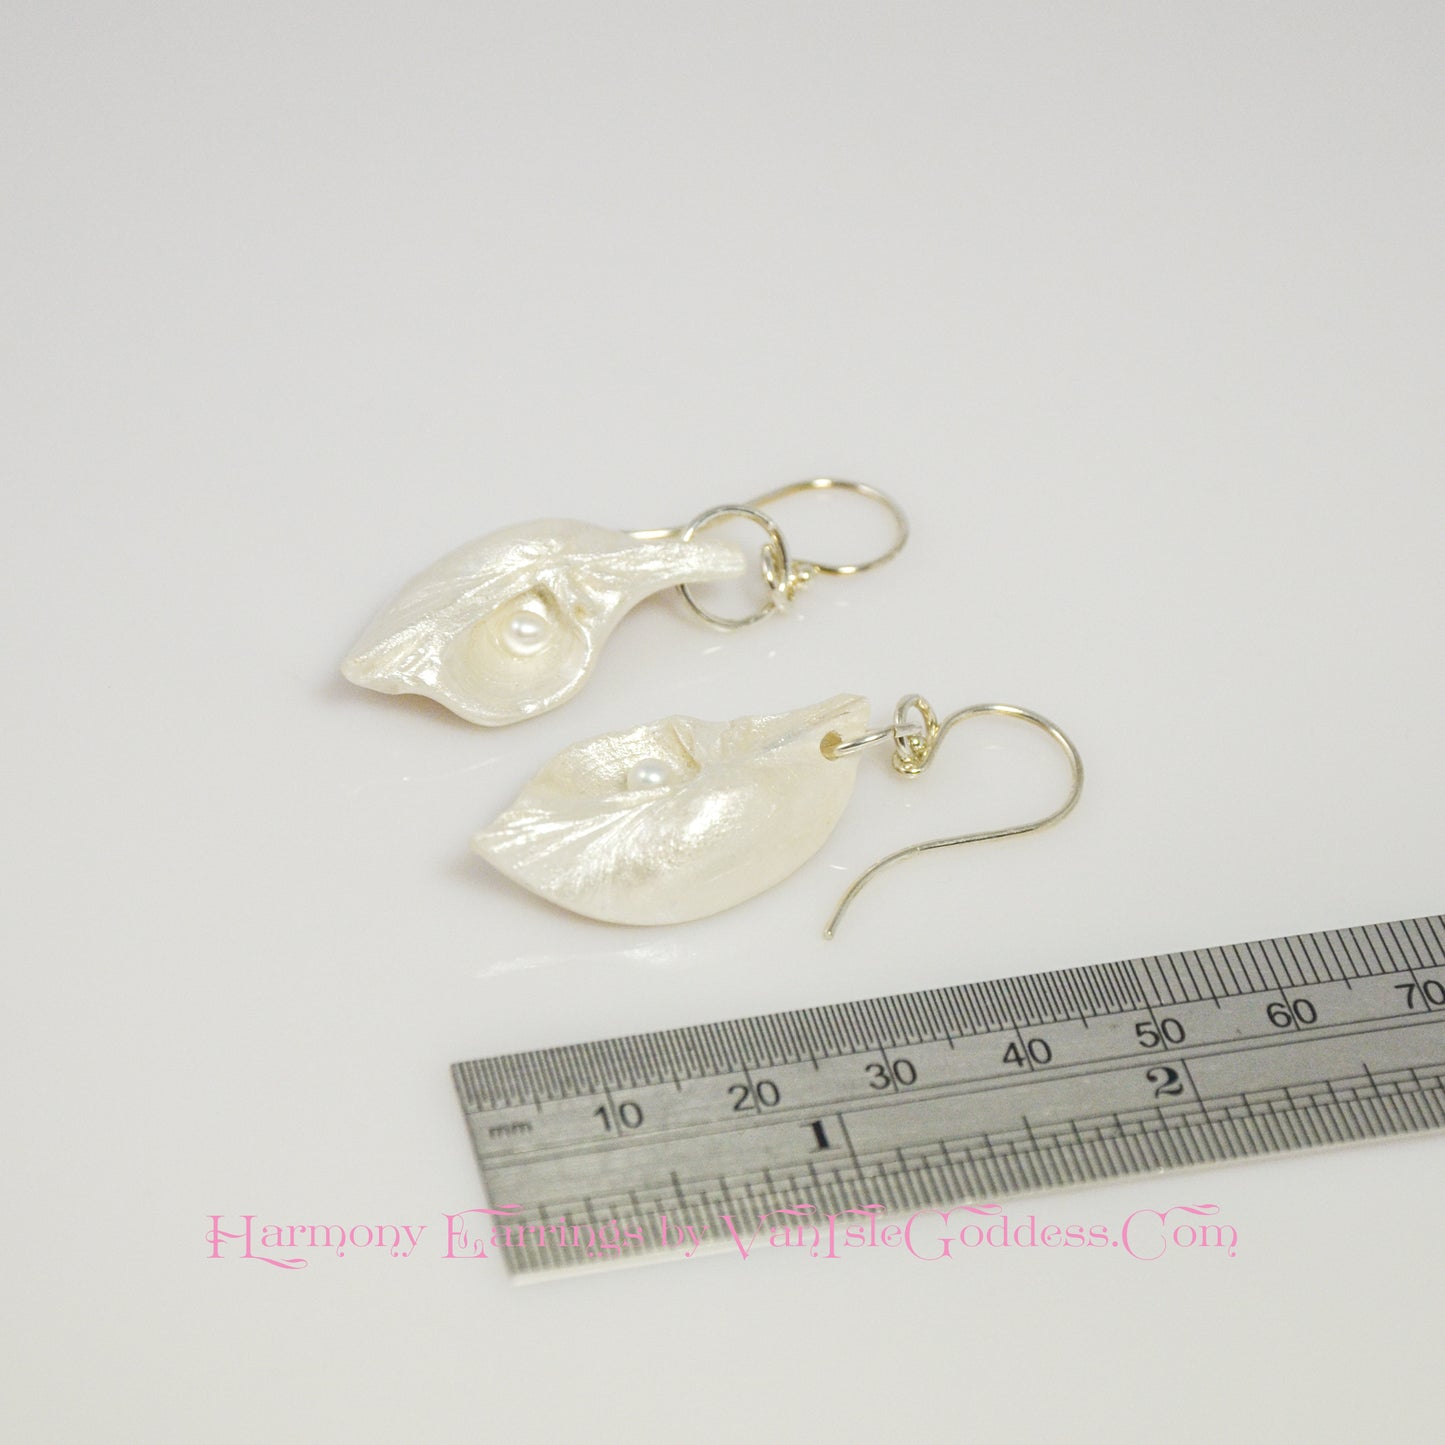 Harmony Freshwater Pearls Island Goddess Seashell Earrings